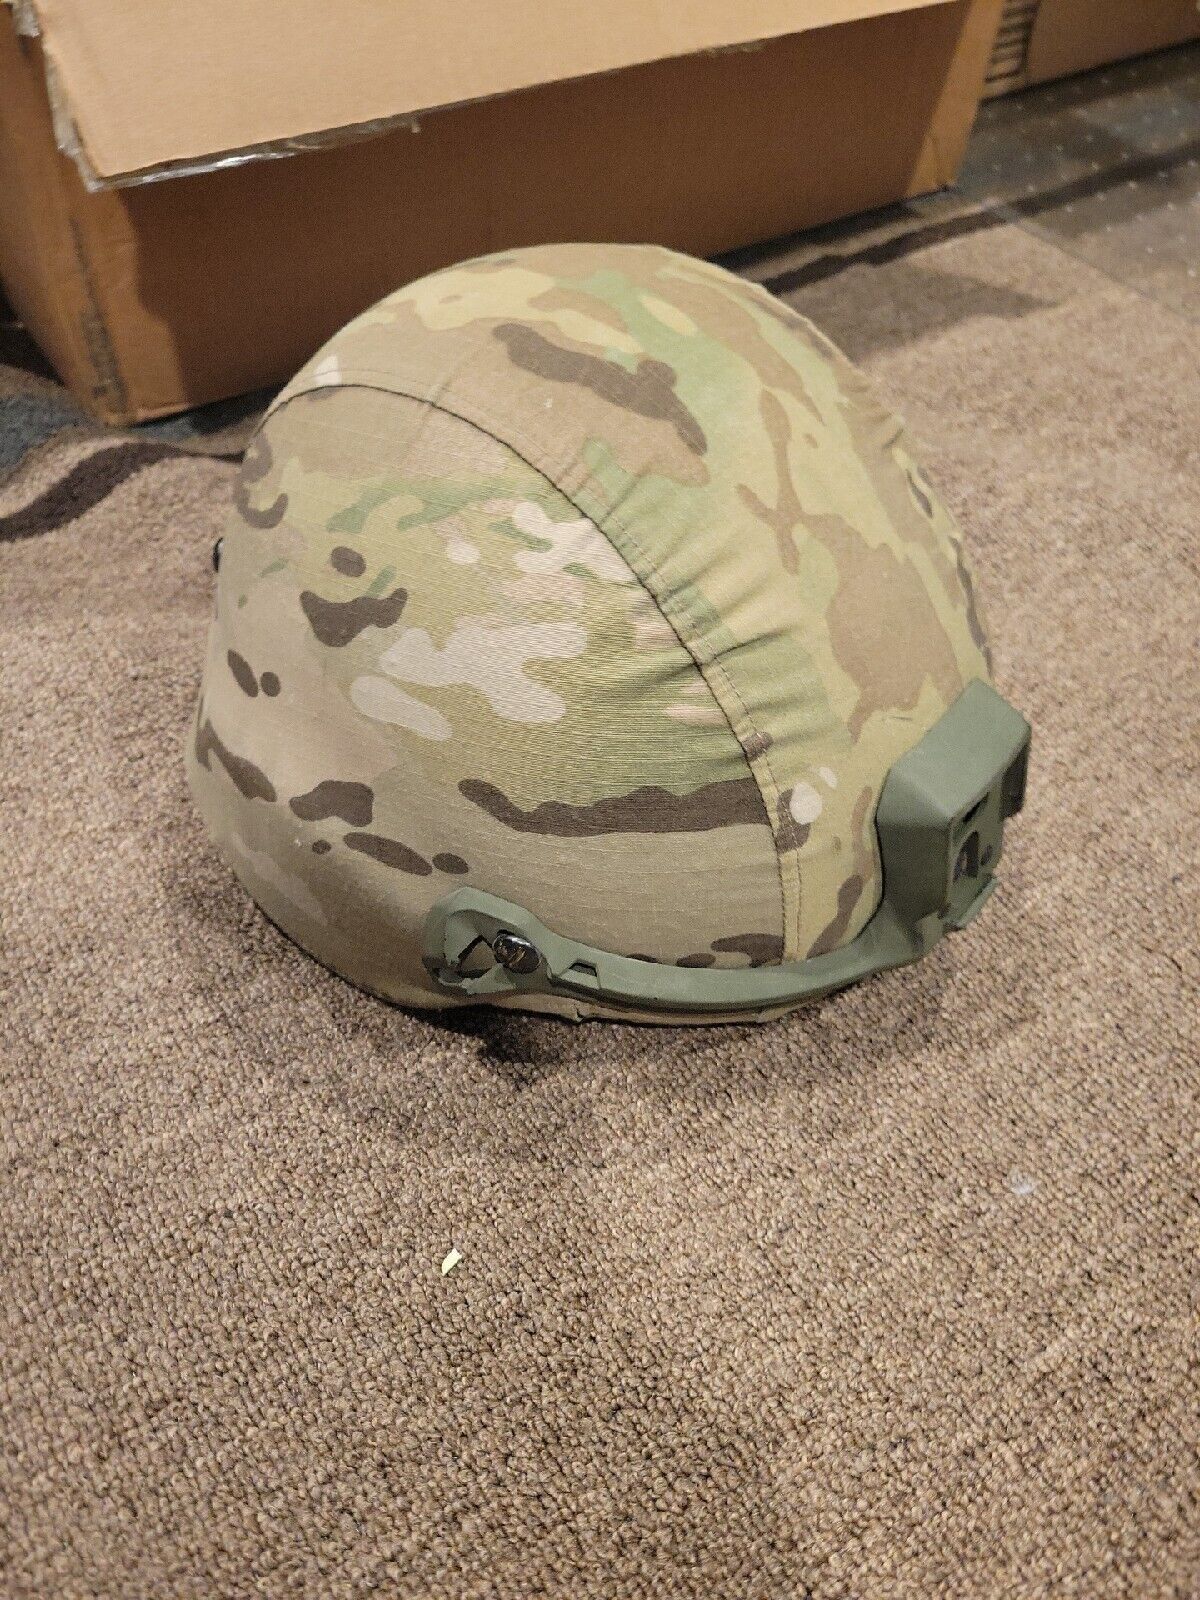 revision helmet